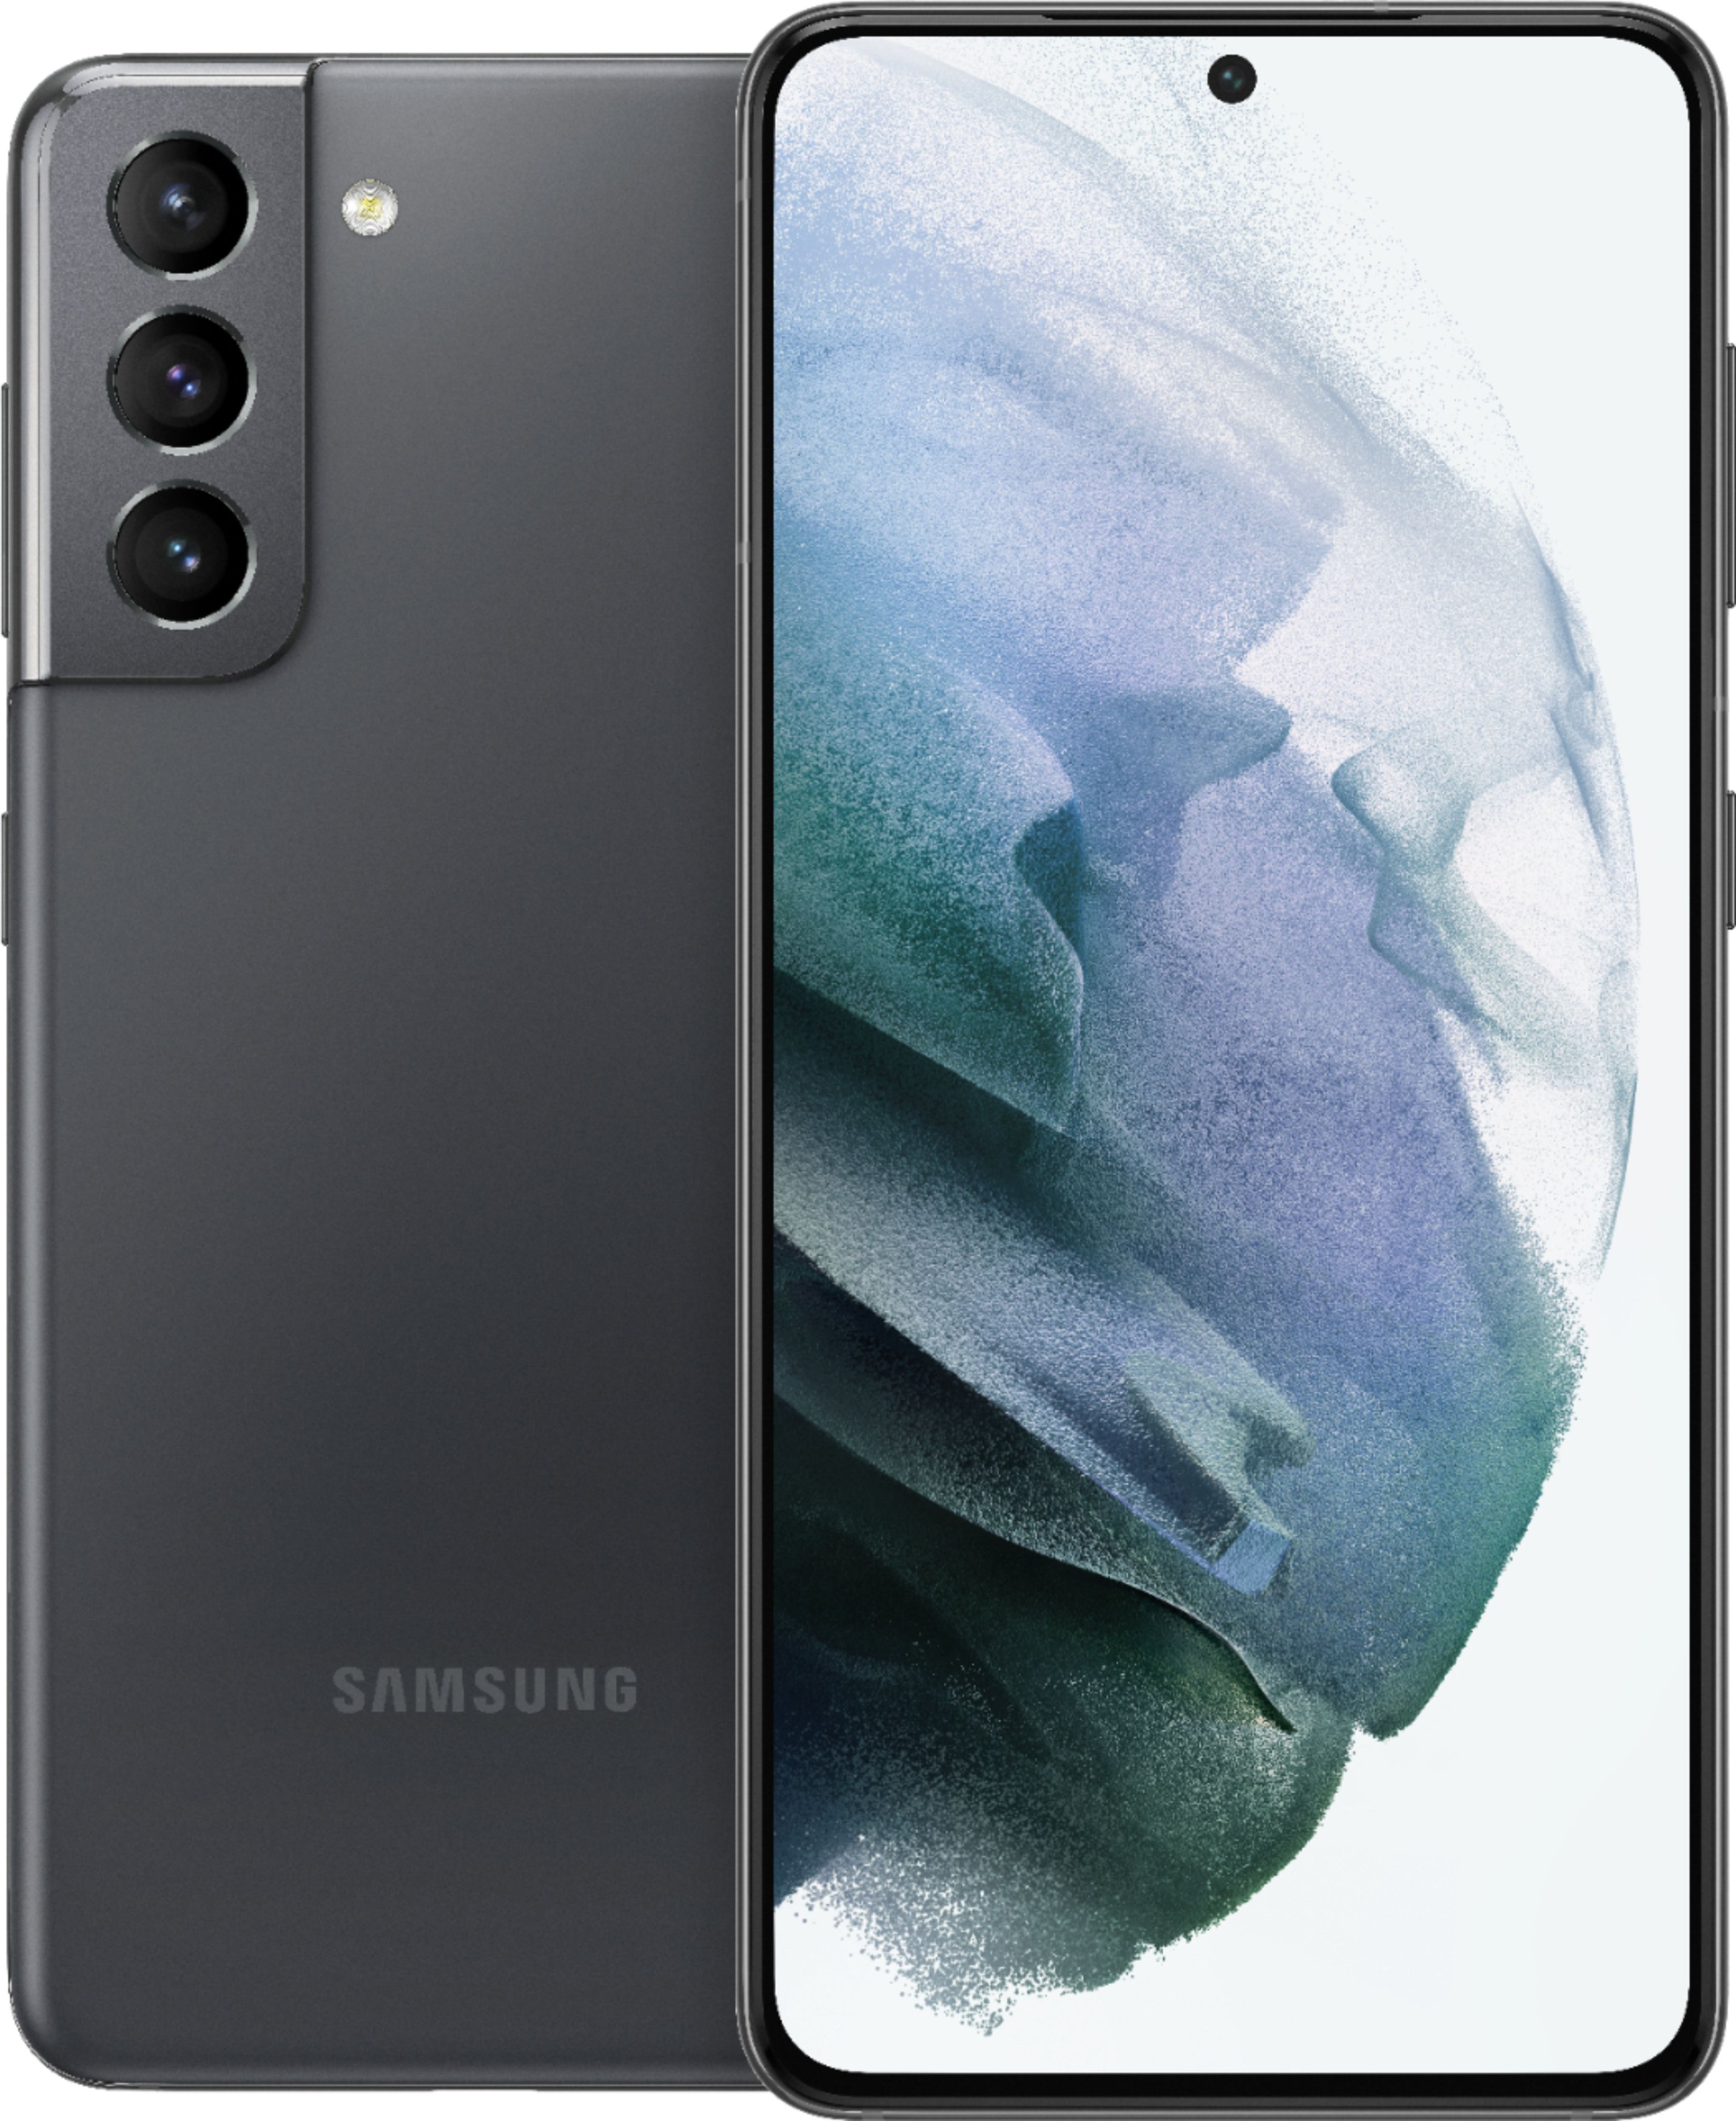 Samsung Galaxy S21 5g 256gb Unlocked Phantom Gray Sm G991uzaexaa Best Buy